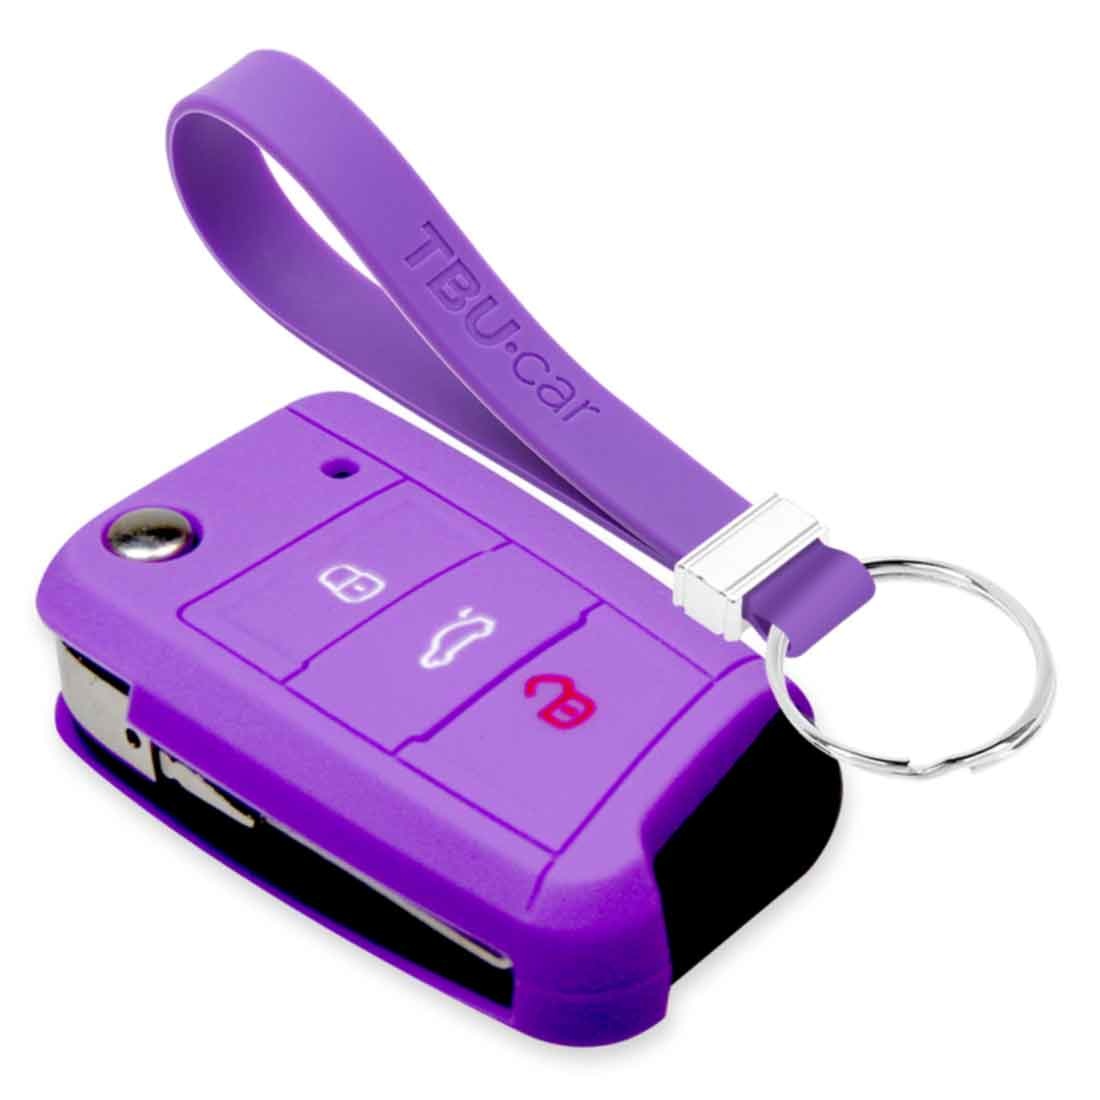 TBU car TBU car Autoschlüssel Hülle kompatibel mit VW 3 Tasten - Schutzhülle aus Silikon - Auto Schlüsselhülle Cover in Violett